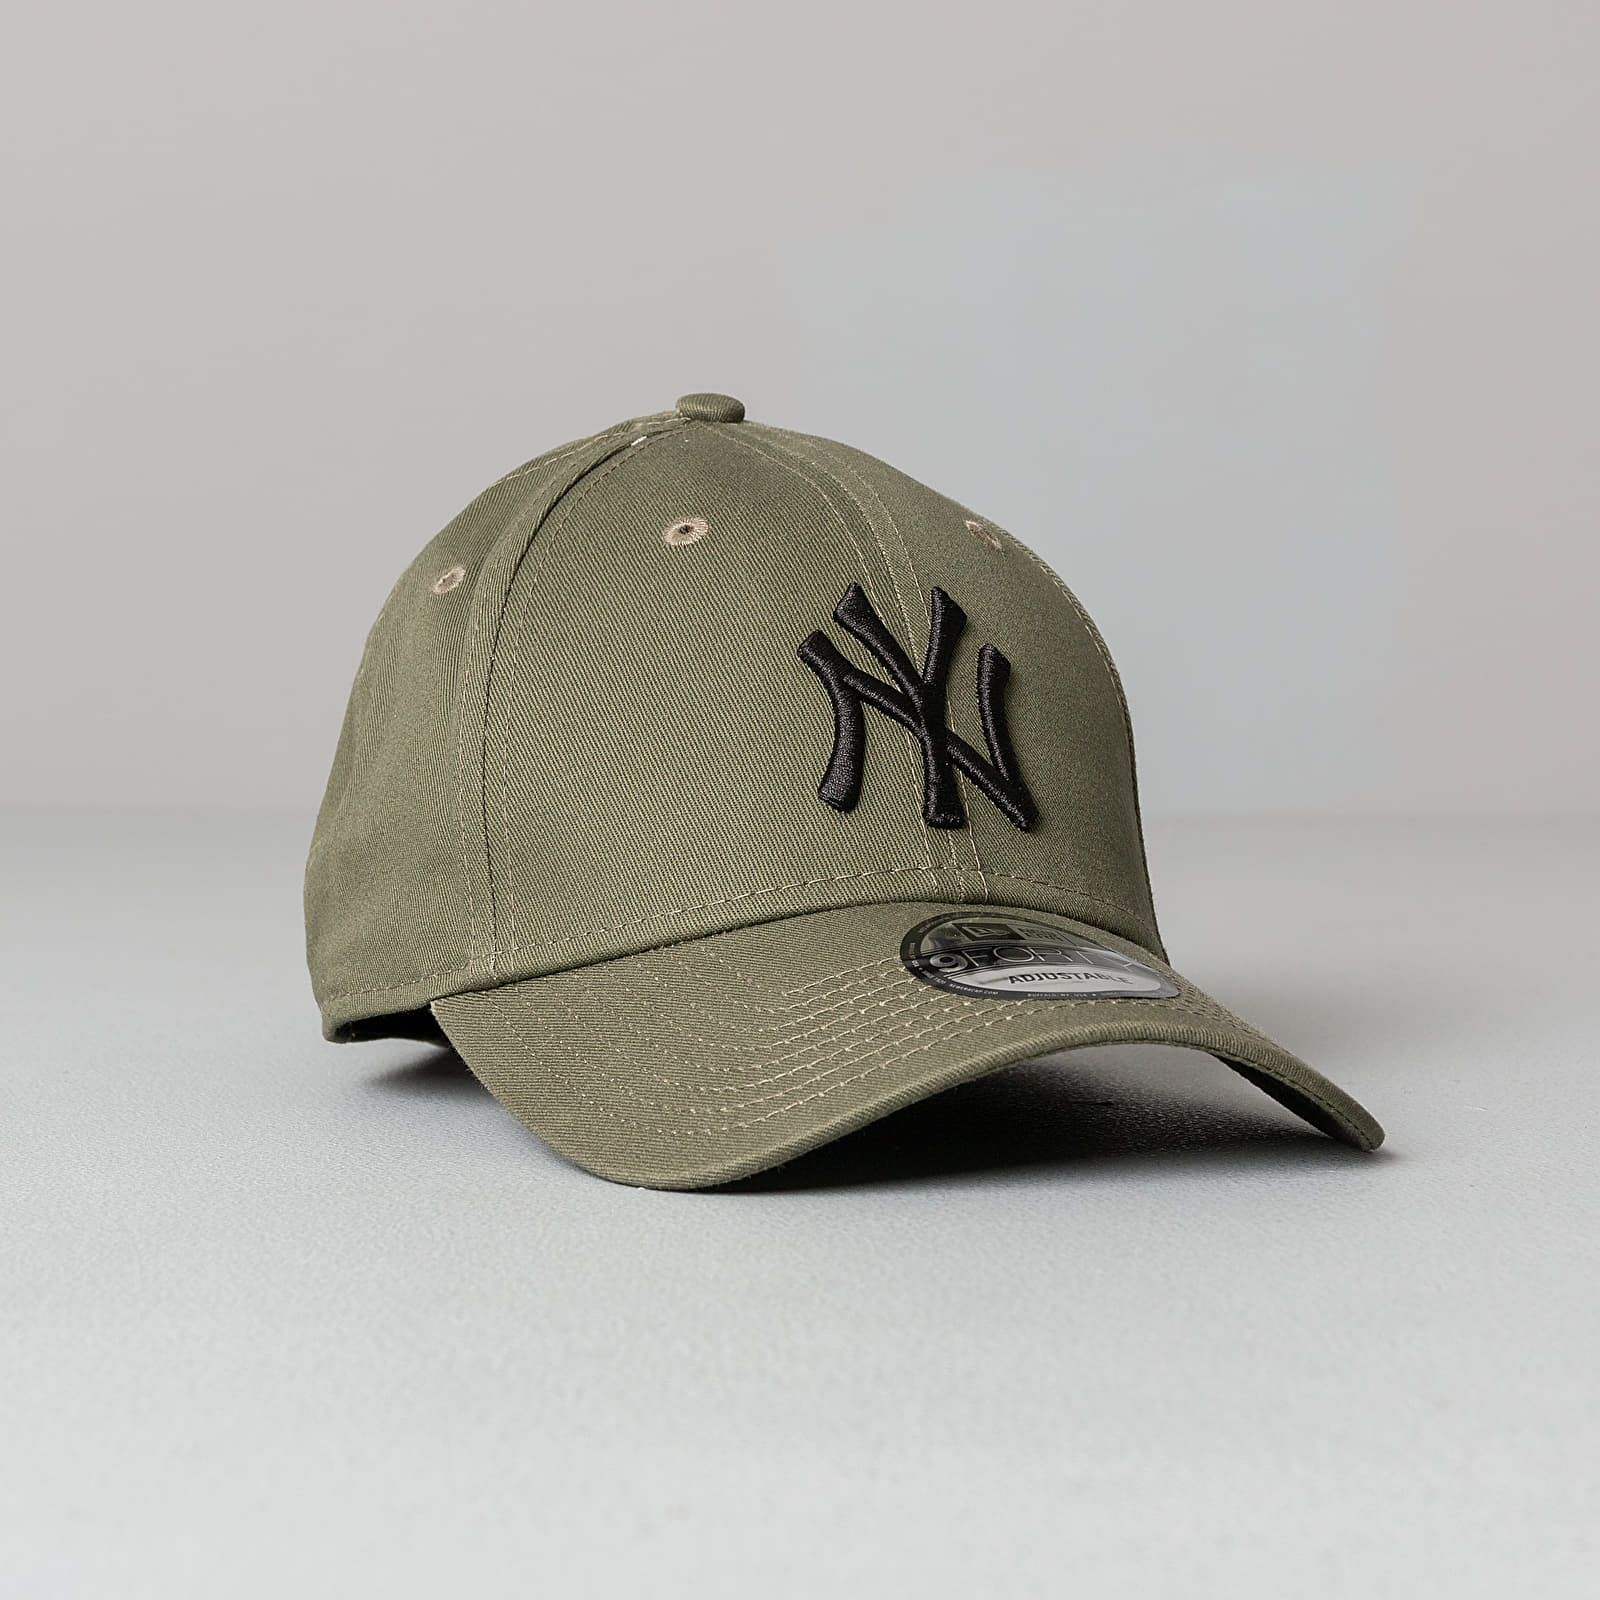 MLB 9Forty | Footshop Caps York Cap New Olive Era Essential New Green Yankees